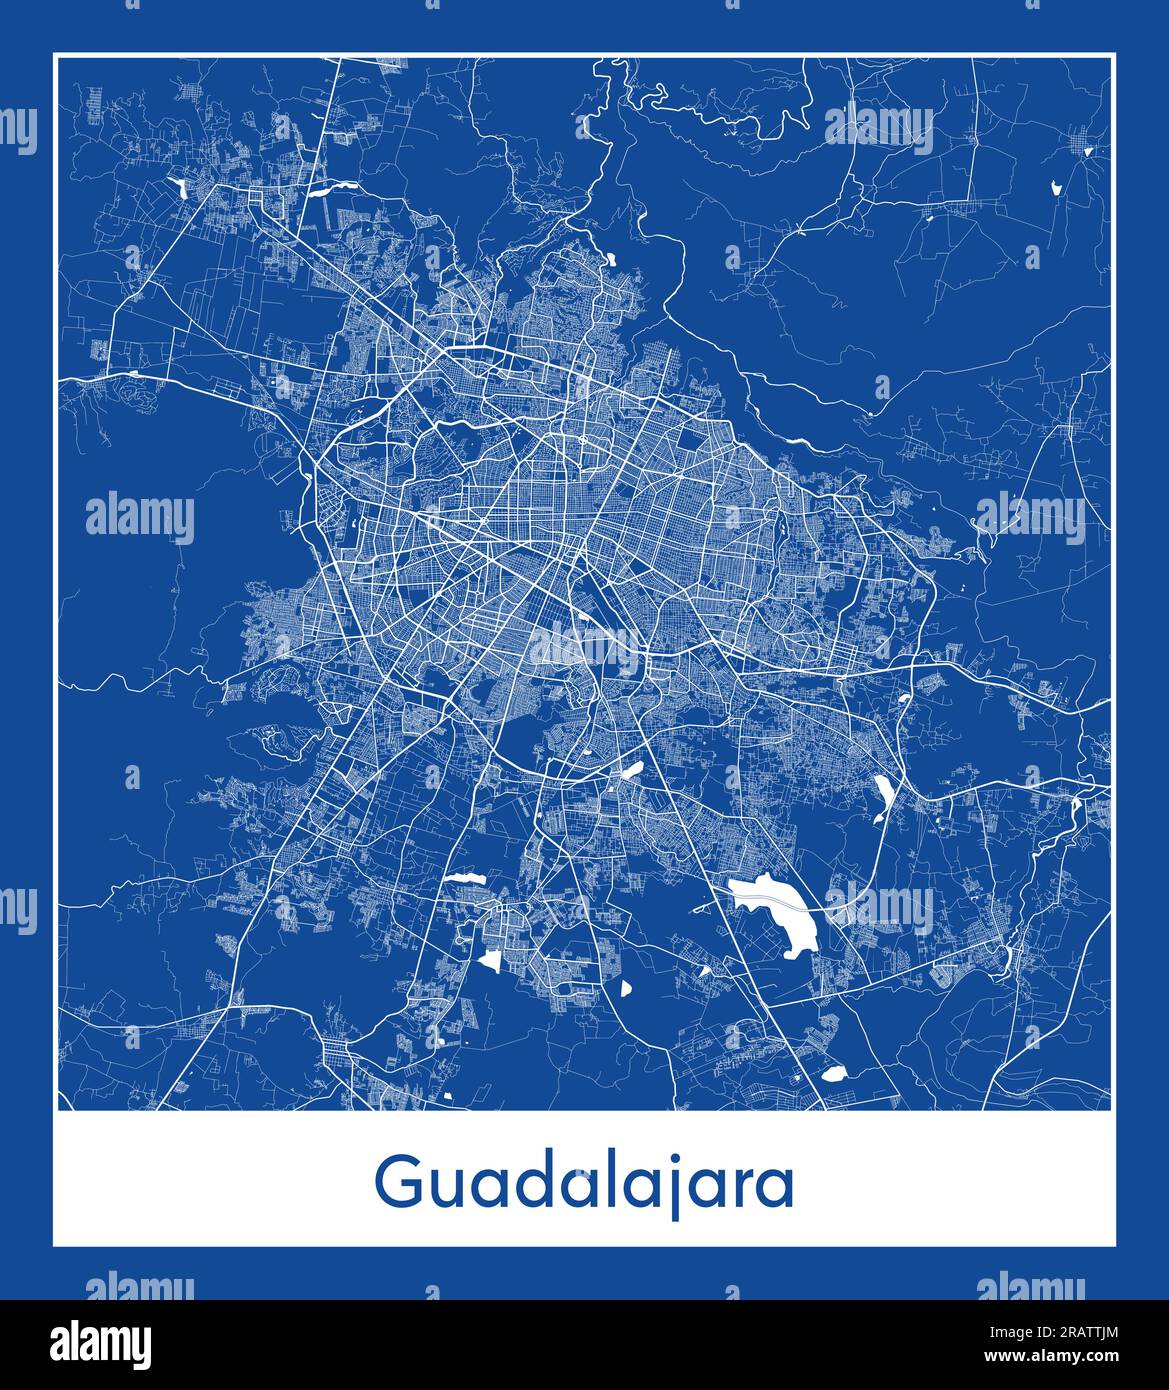 Guadalajara Mexico North America City map blue print vector illustration Stock Vector